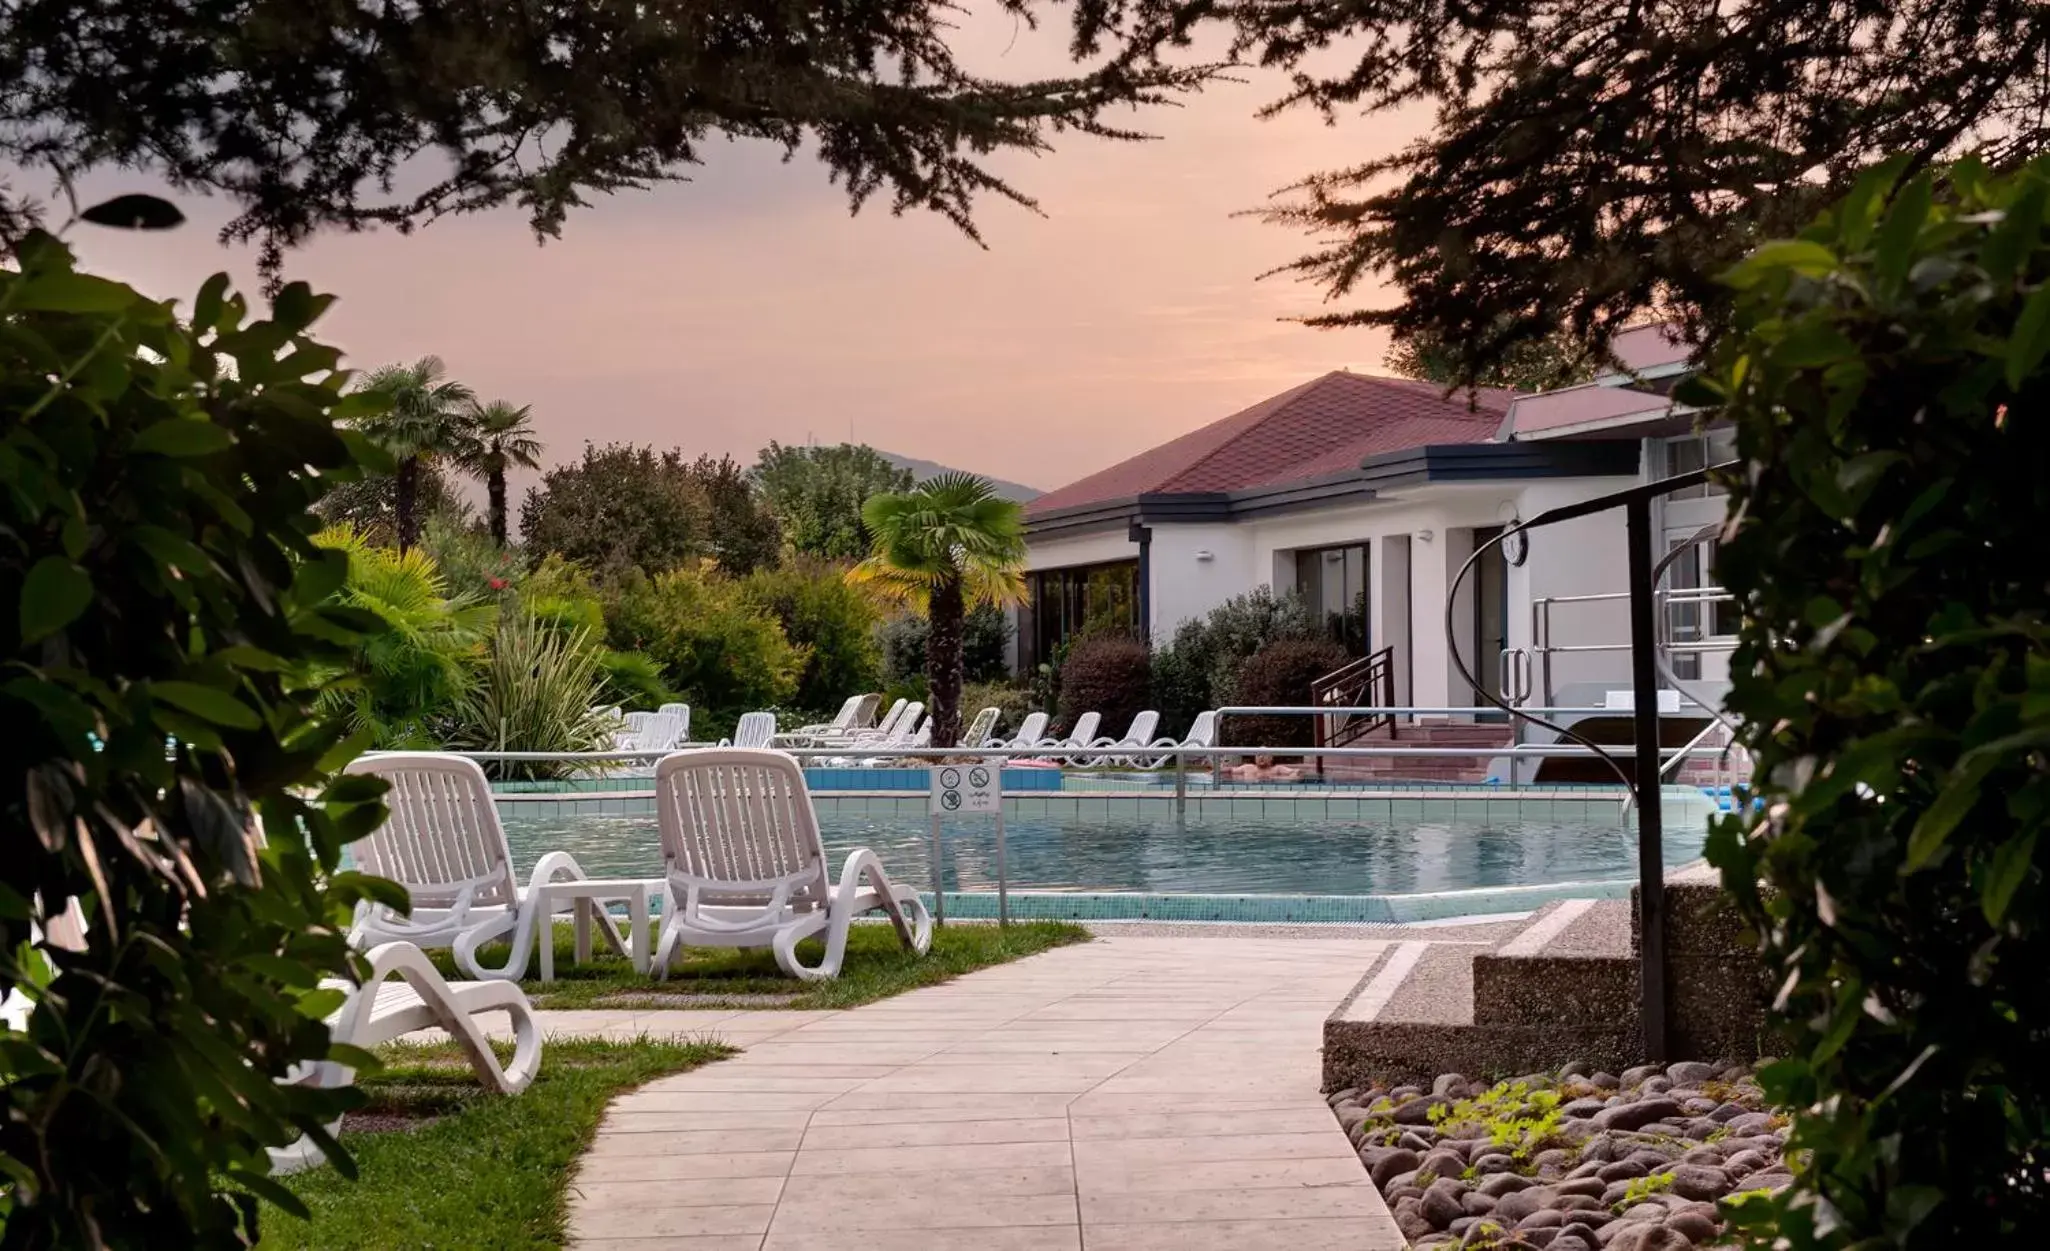 Swimming Pool in Hotel Garden Terme